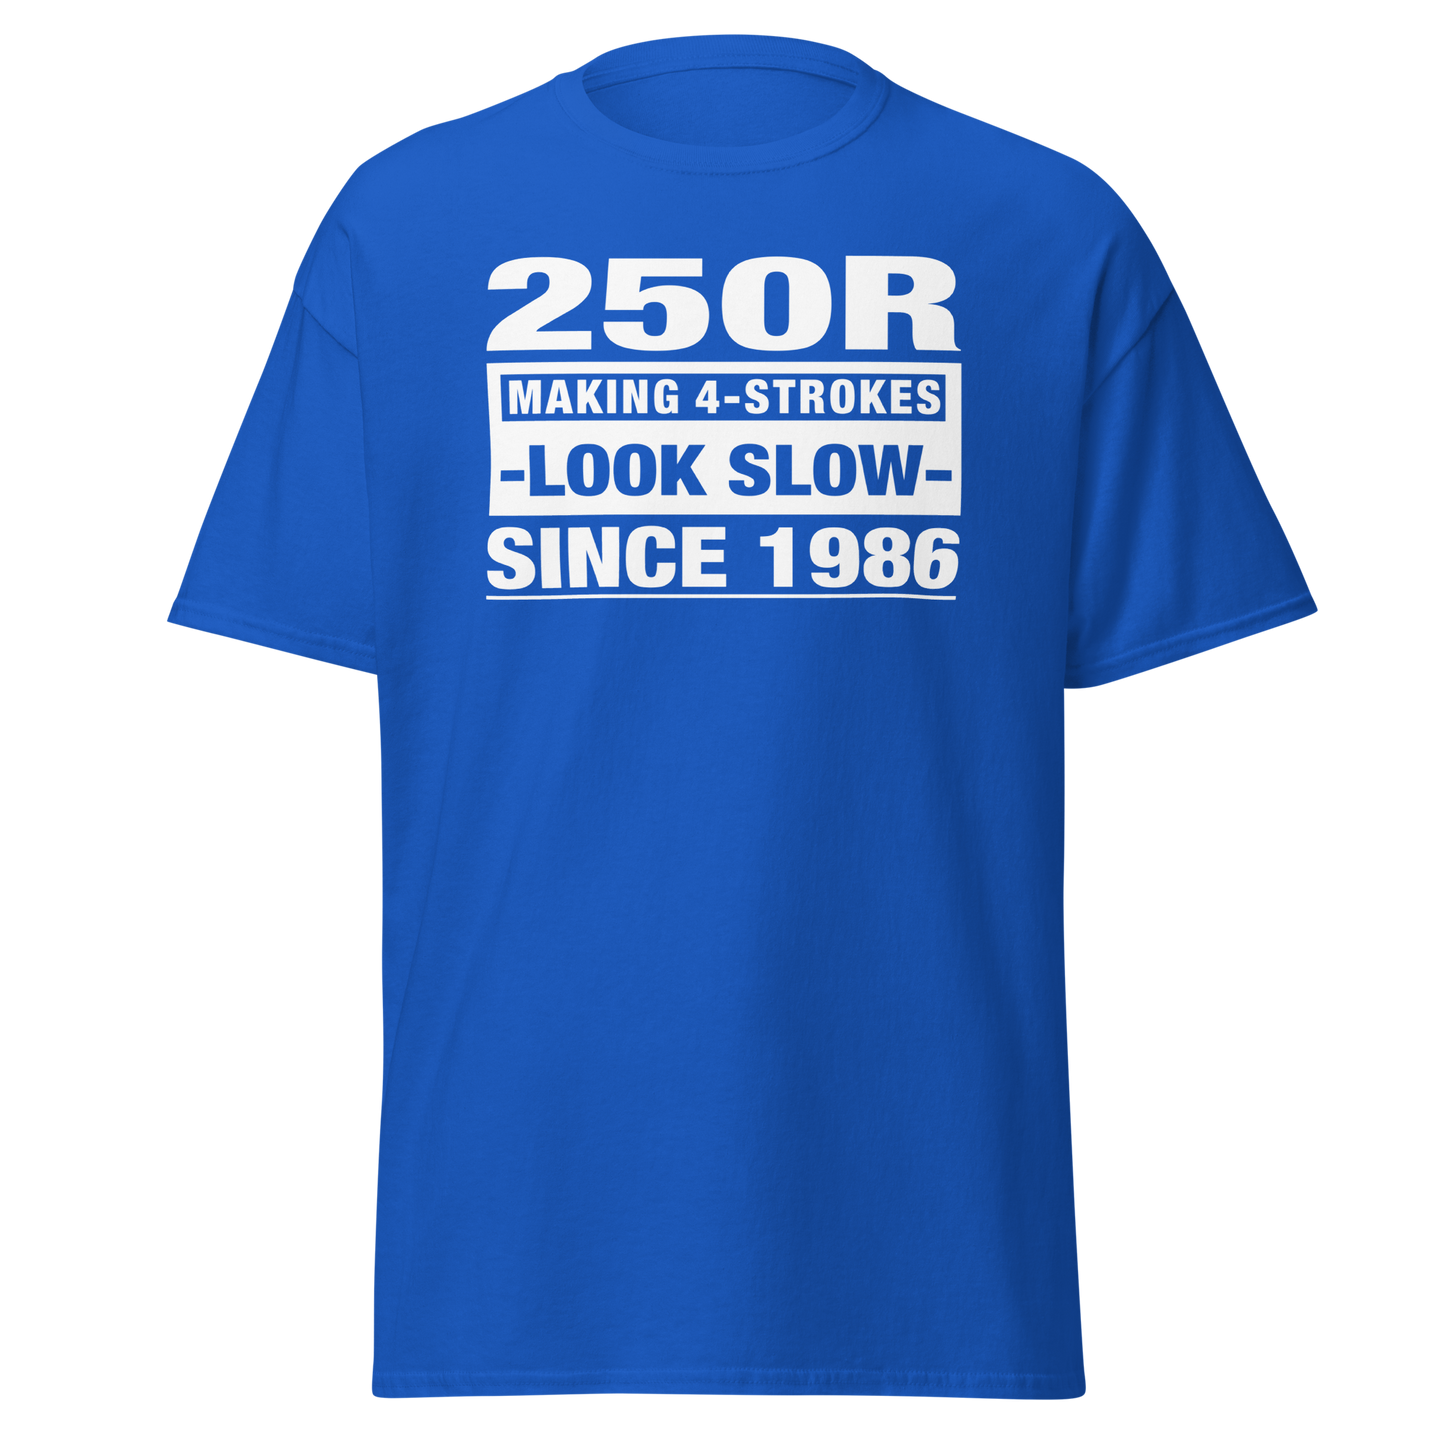 Slow 4-strokes T-shirt